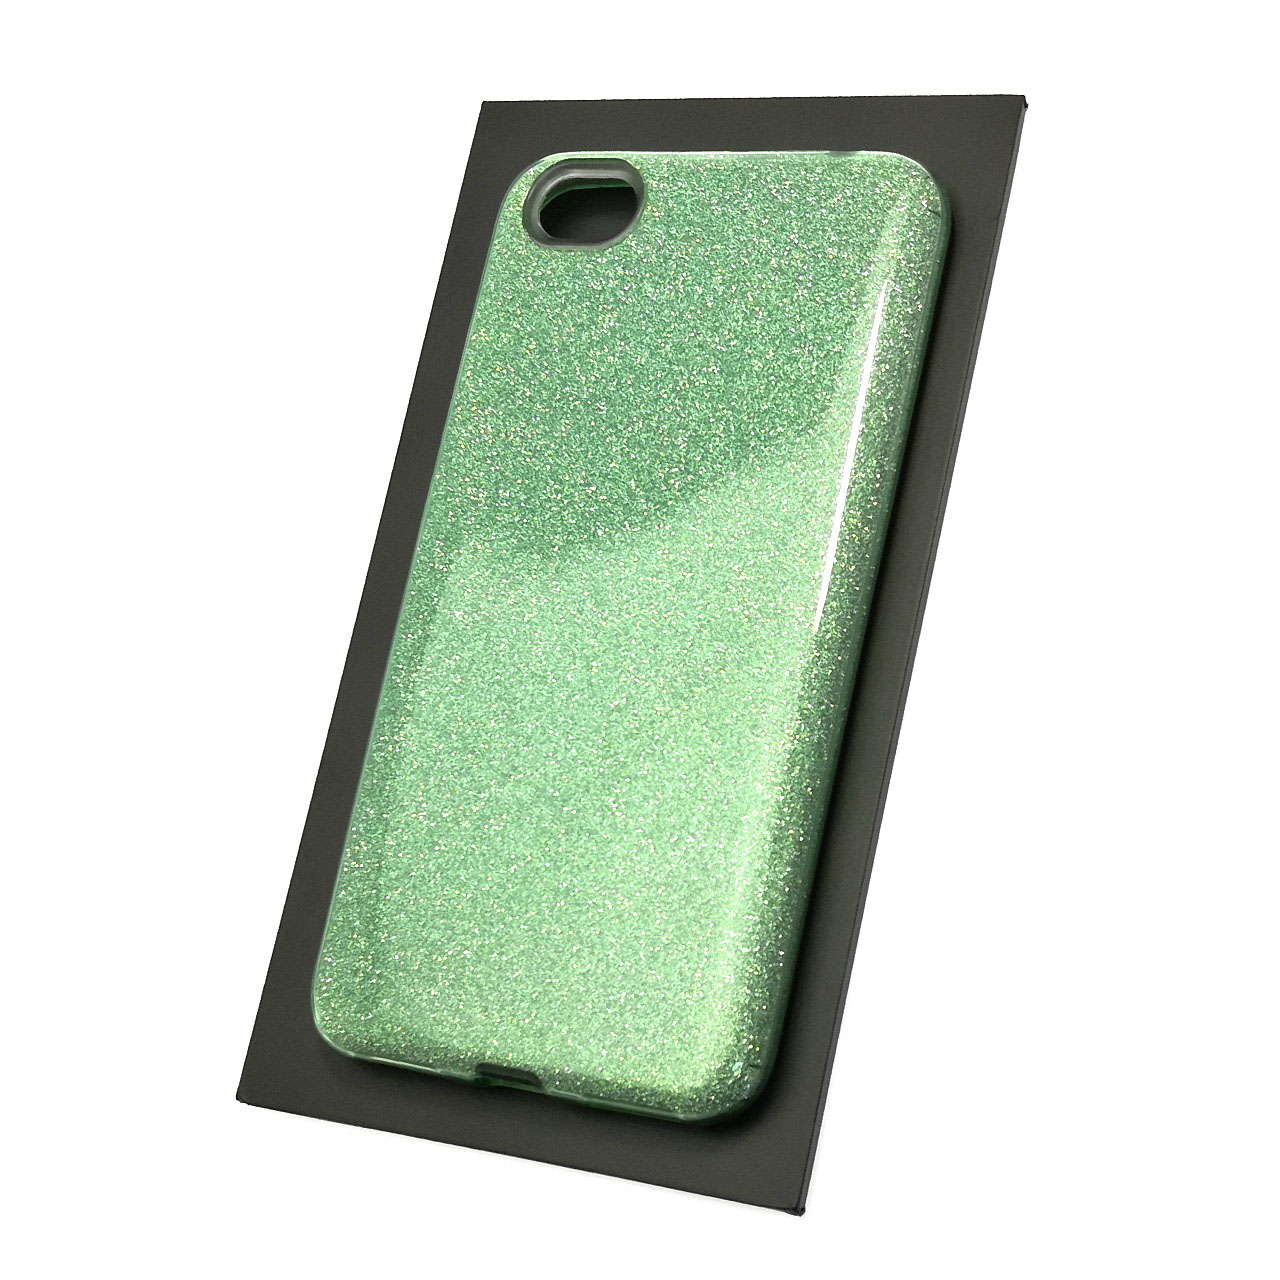 Чехол накладка Shine для XIAOMI Redmi Note 5A 16GB, силикон, блестки, цвет зеленый